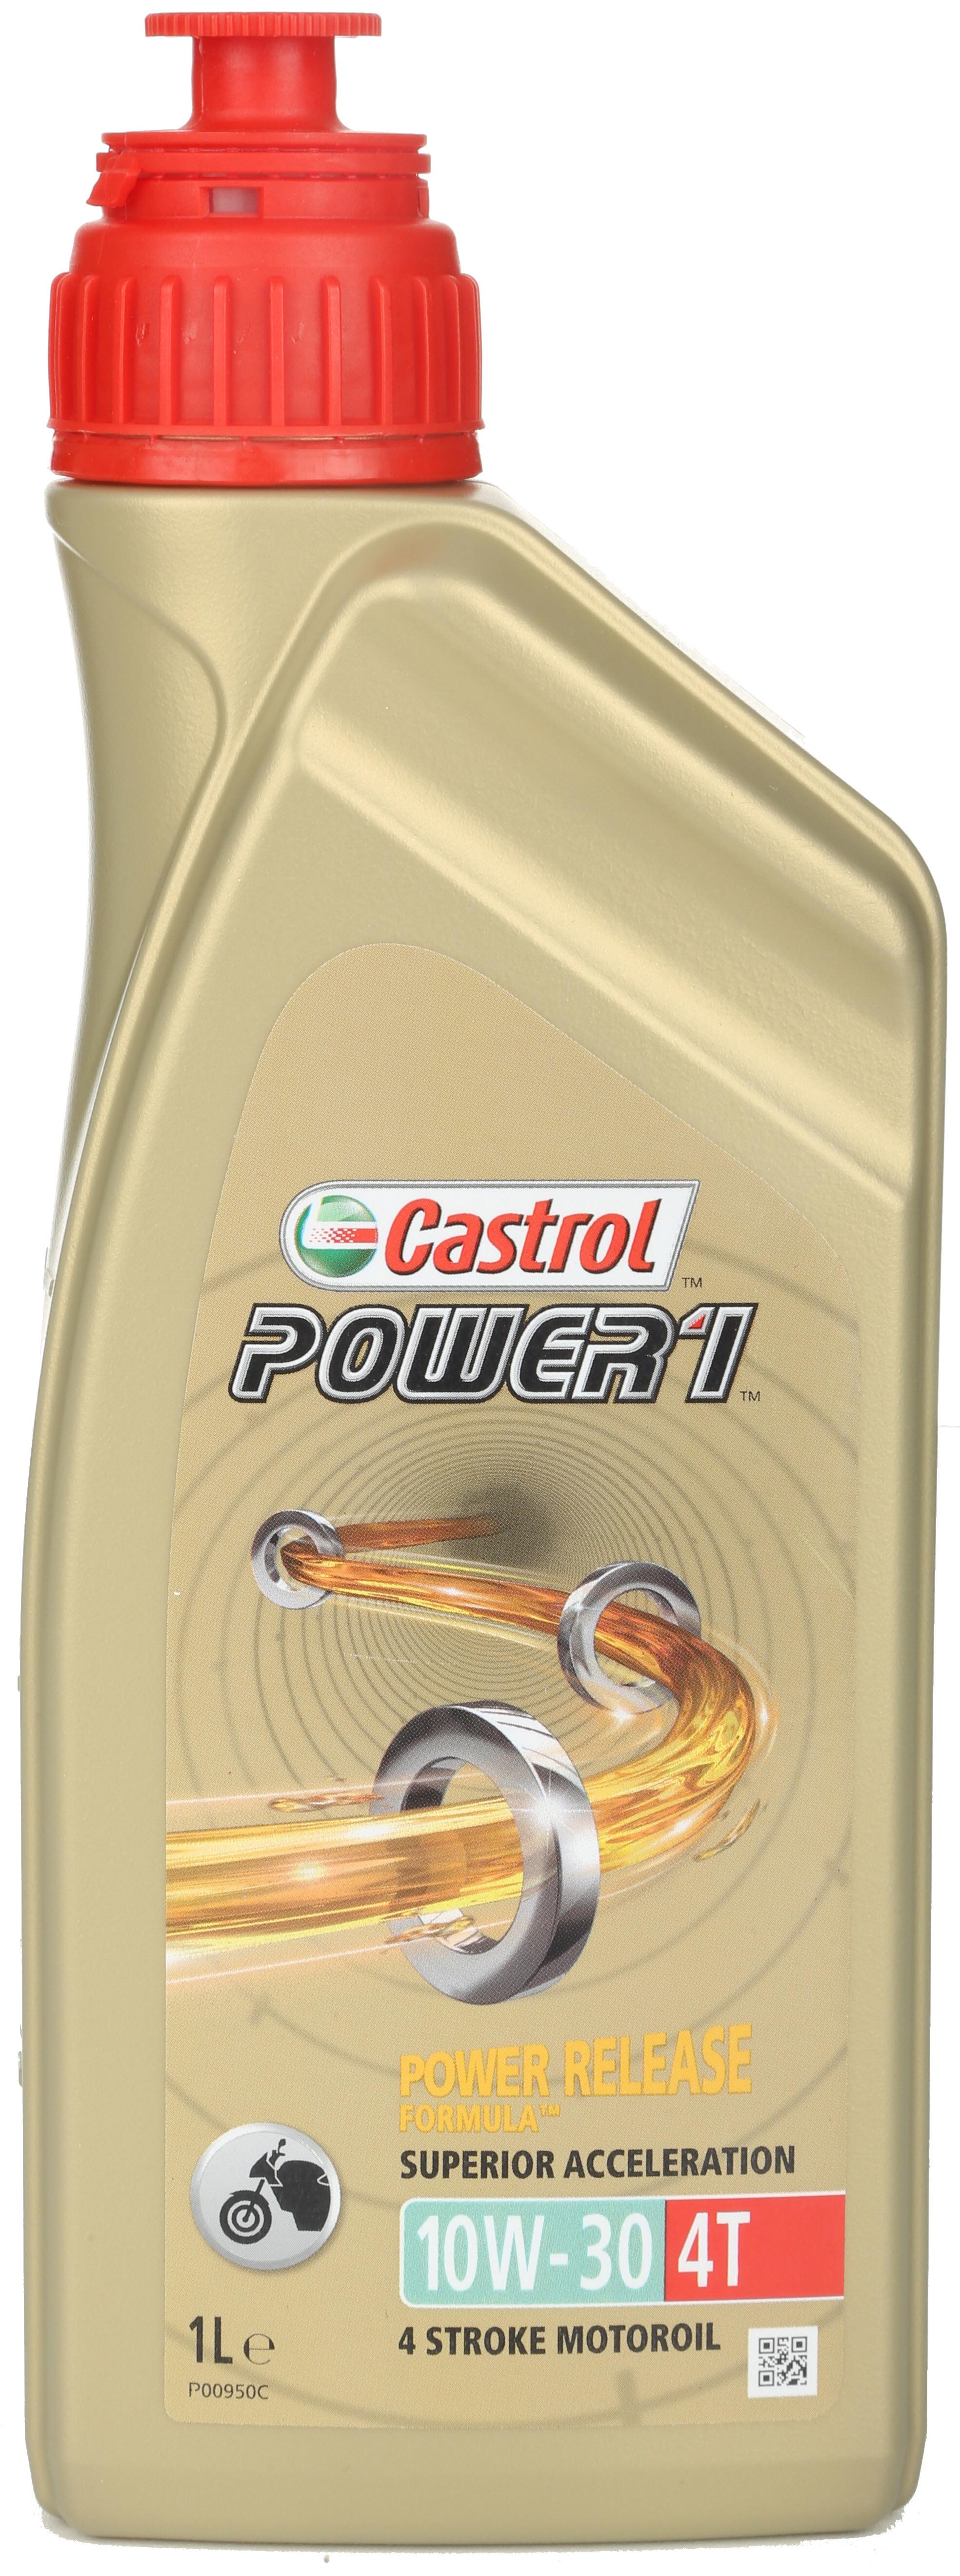 Castrol Power 1 4T 10W/30 Motorcycle Engine Oil - 1Ltr